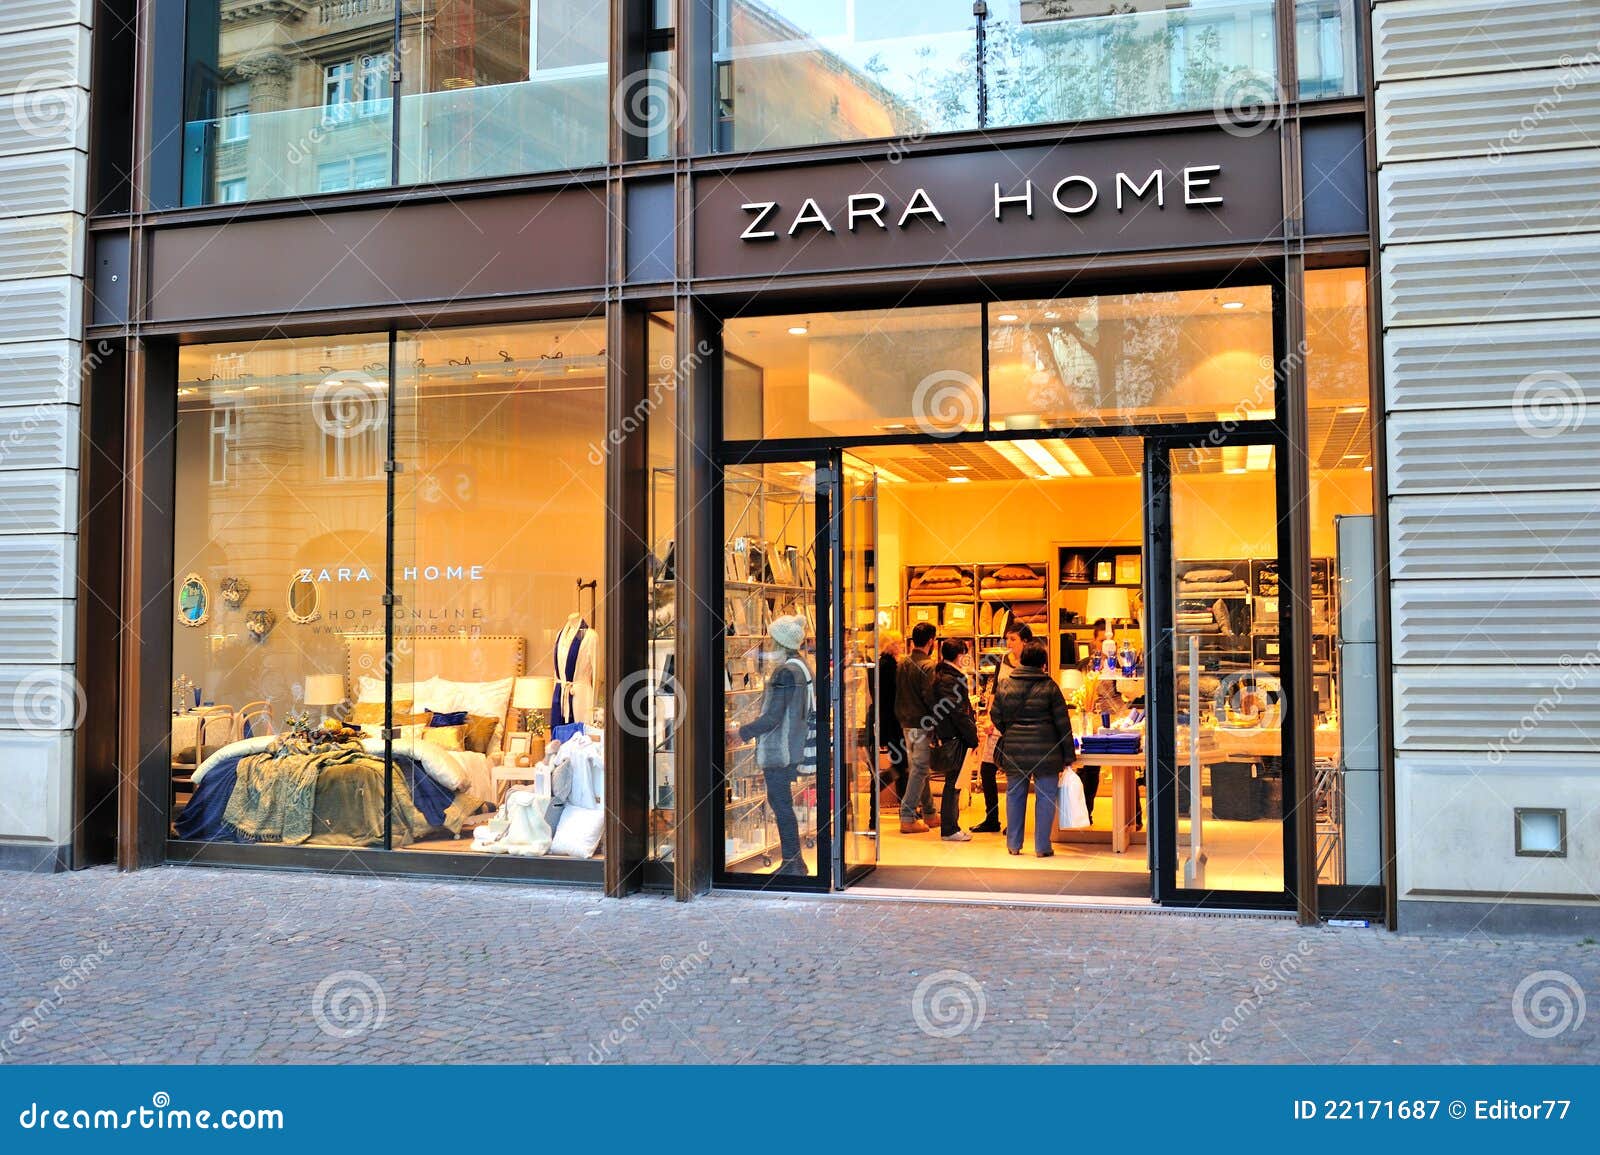 zara online home store